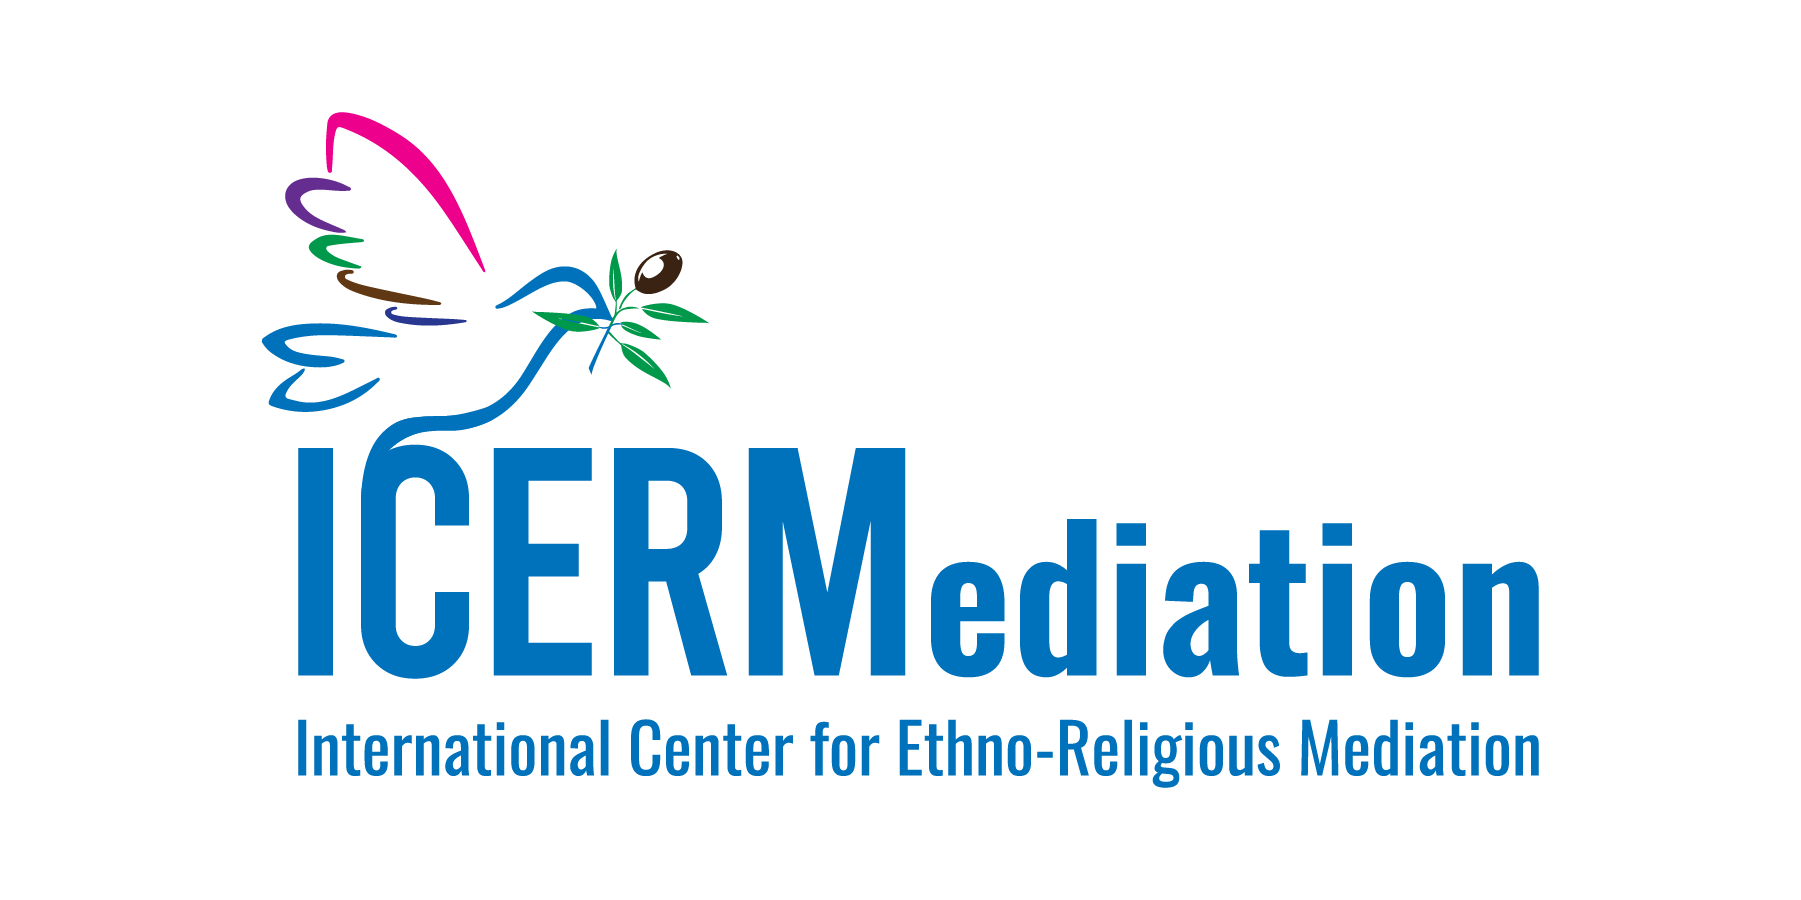 International Center for Ethno-Religious Mediation (ICERMediation)